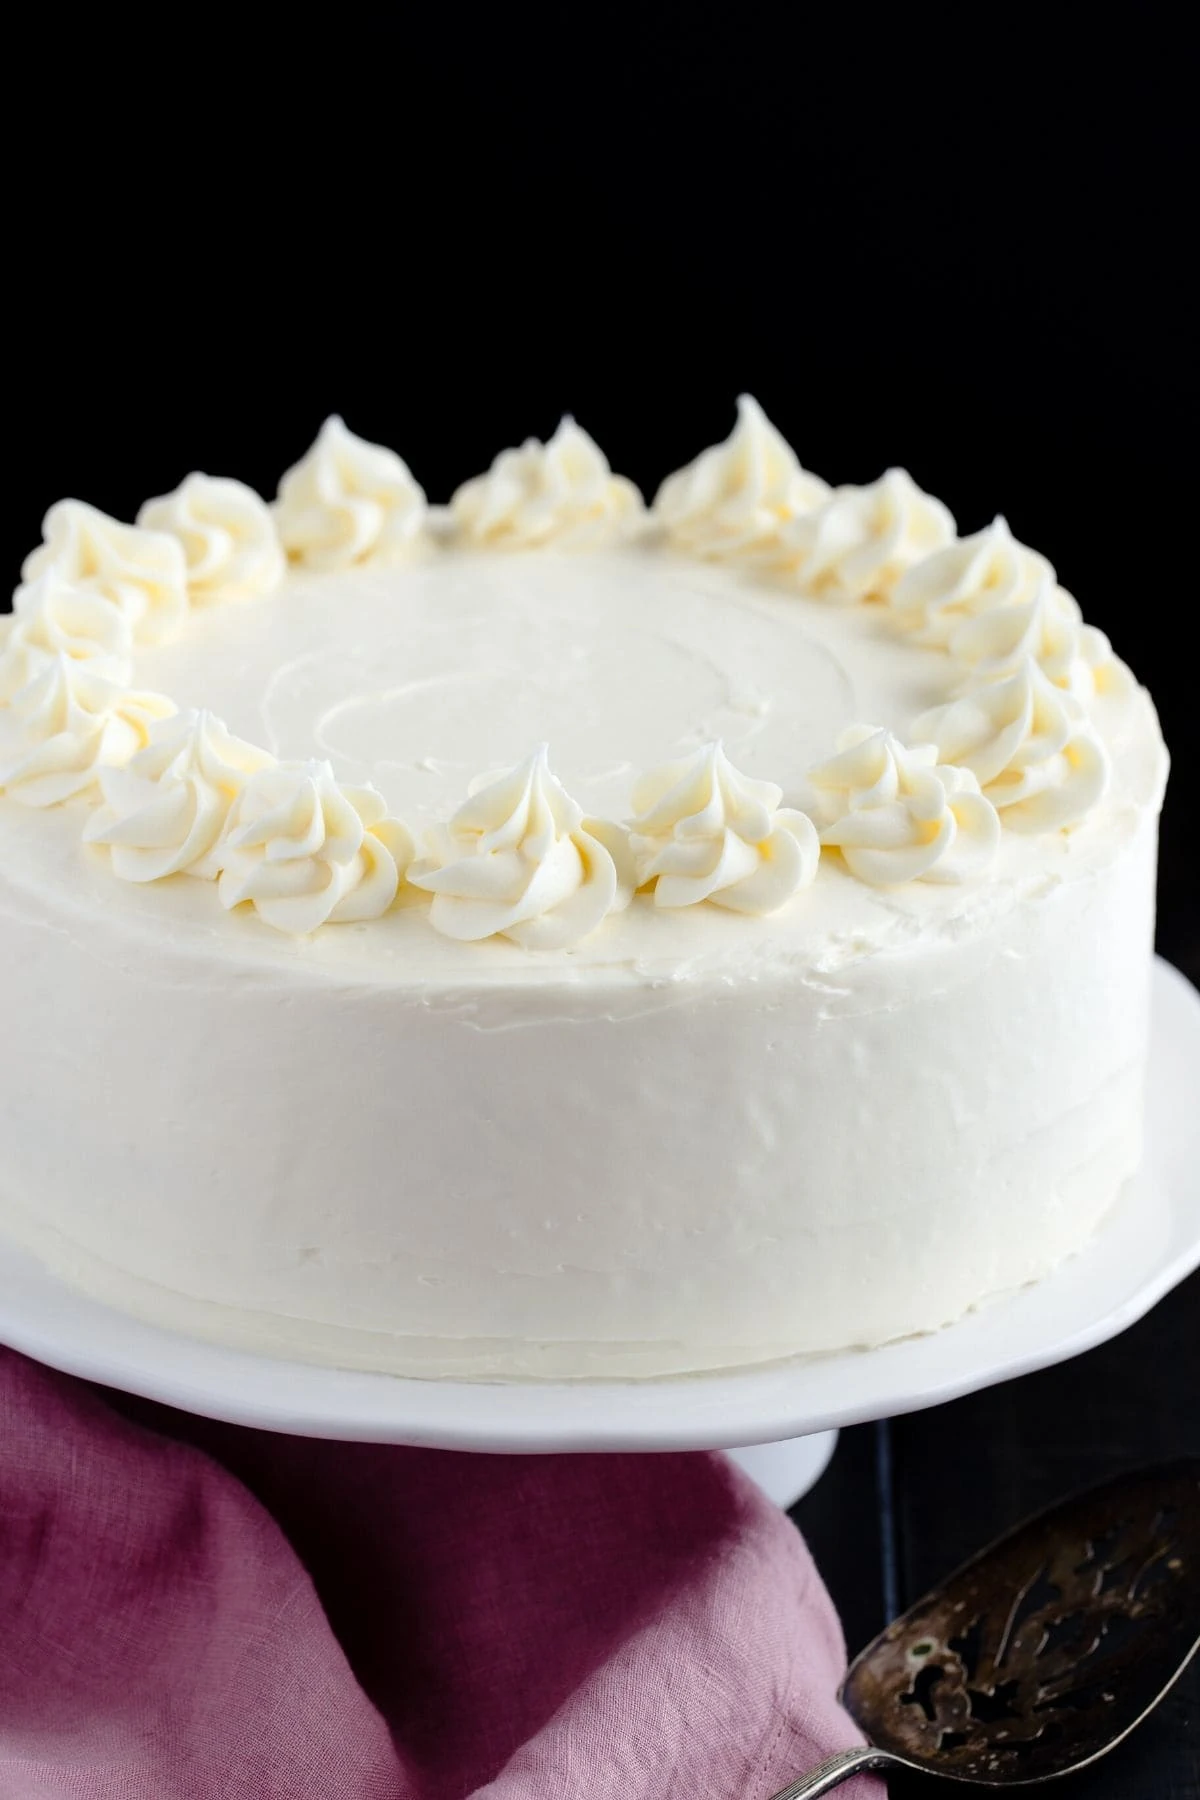 Homemade homemade vanilla cake on a white cake stand.